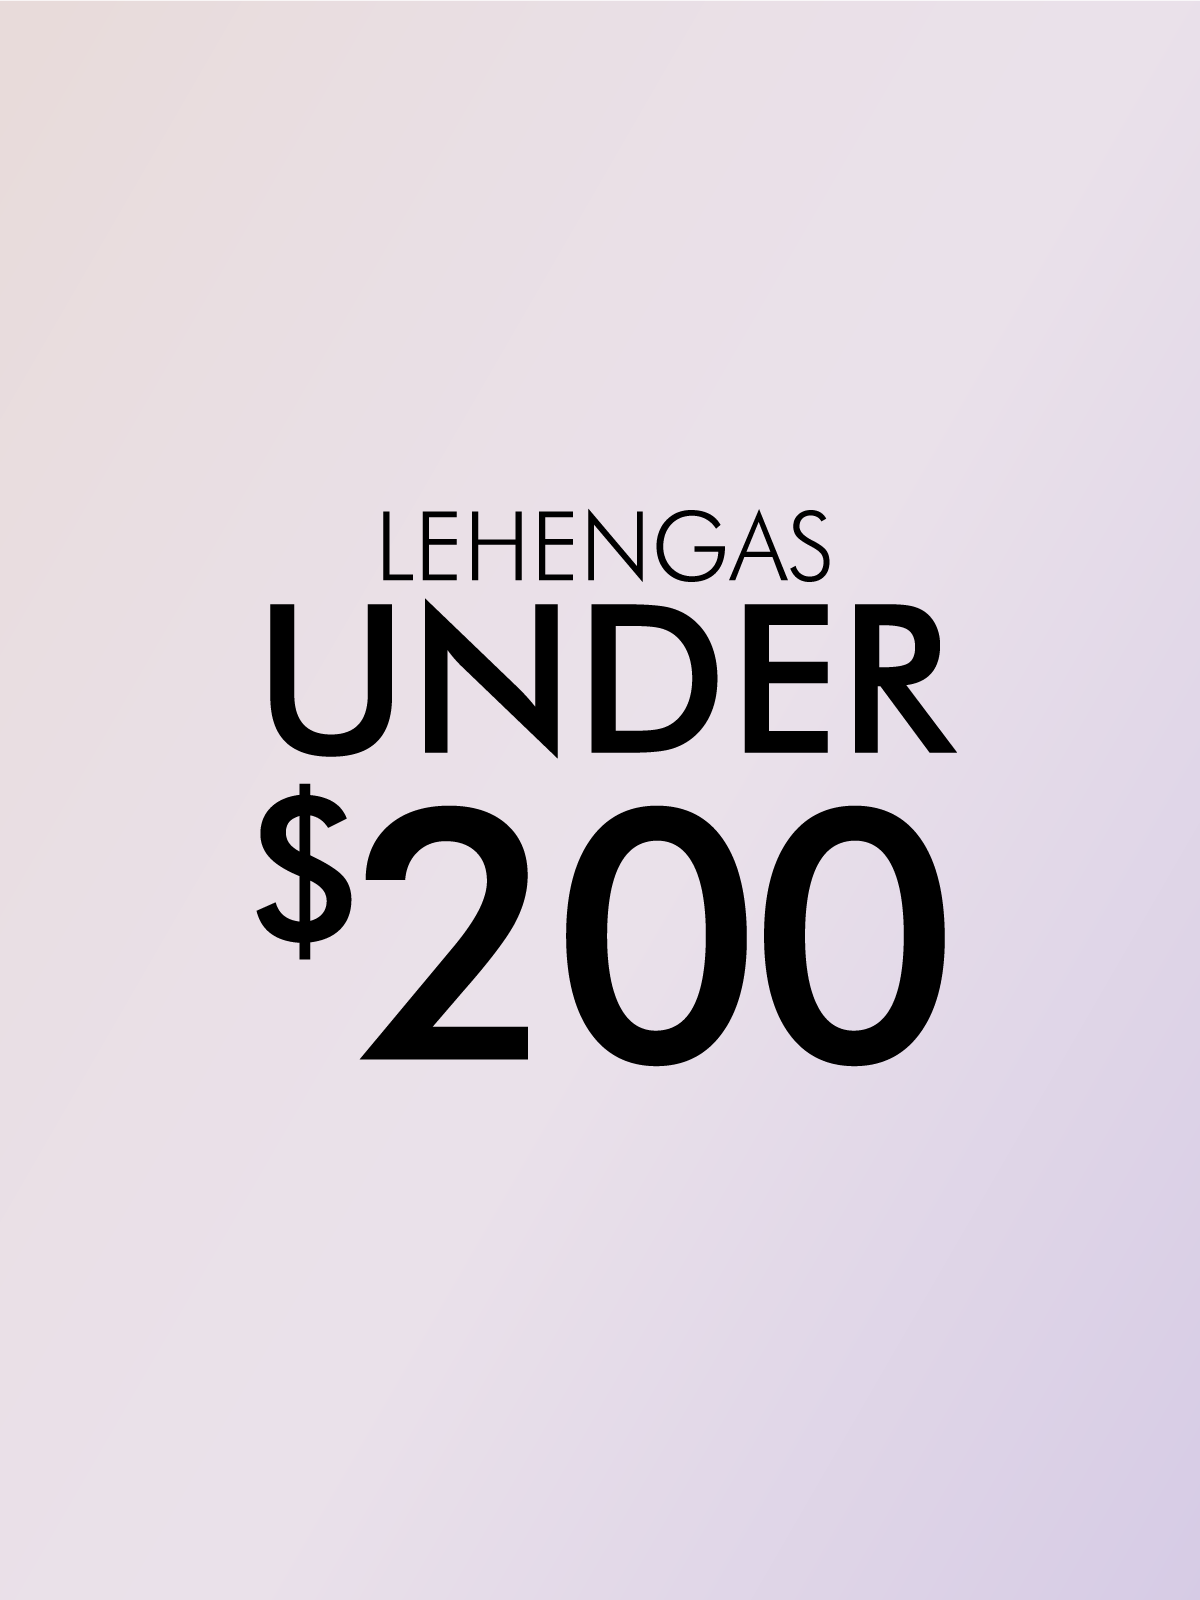 LEHENGAS UNDER $200